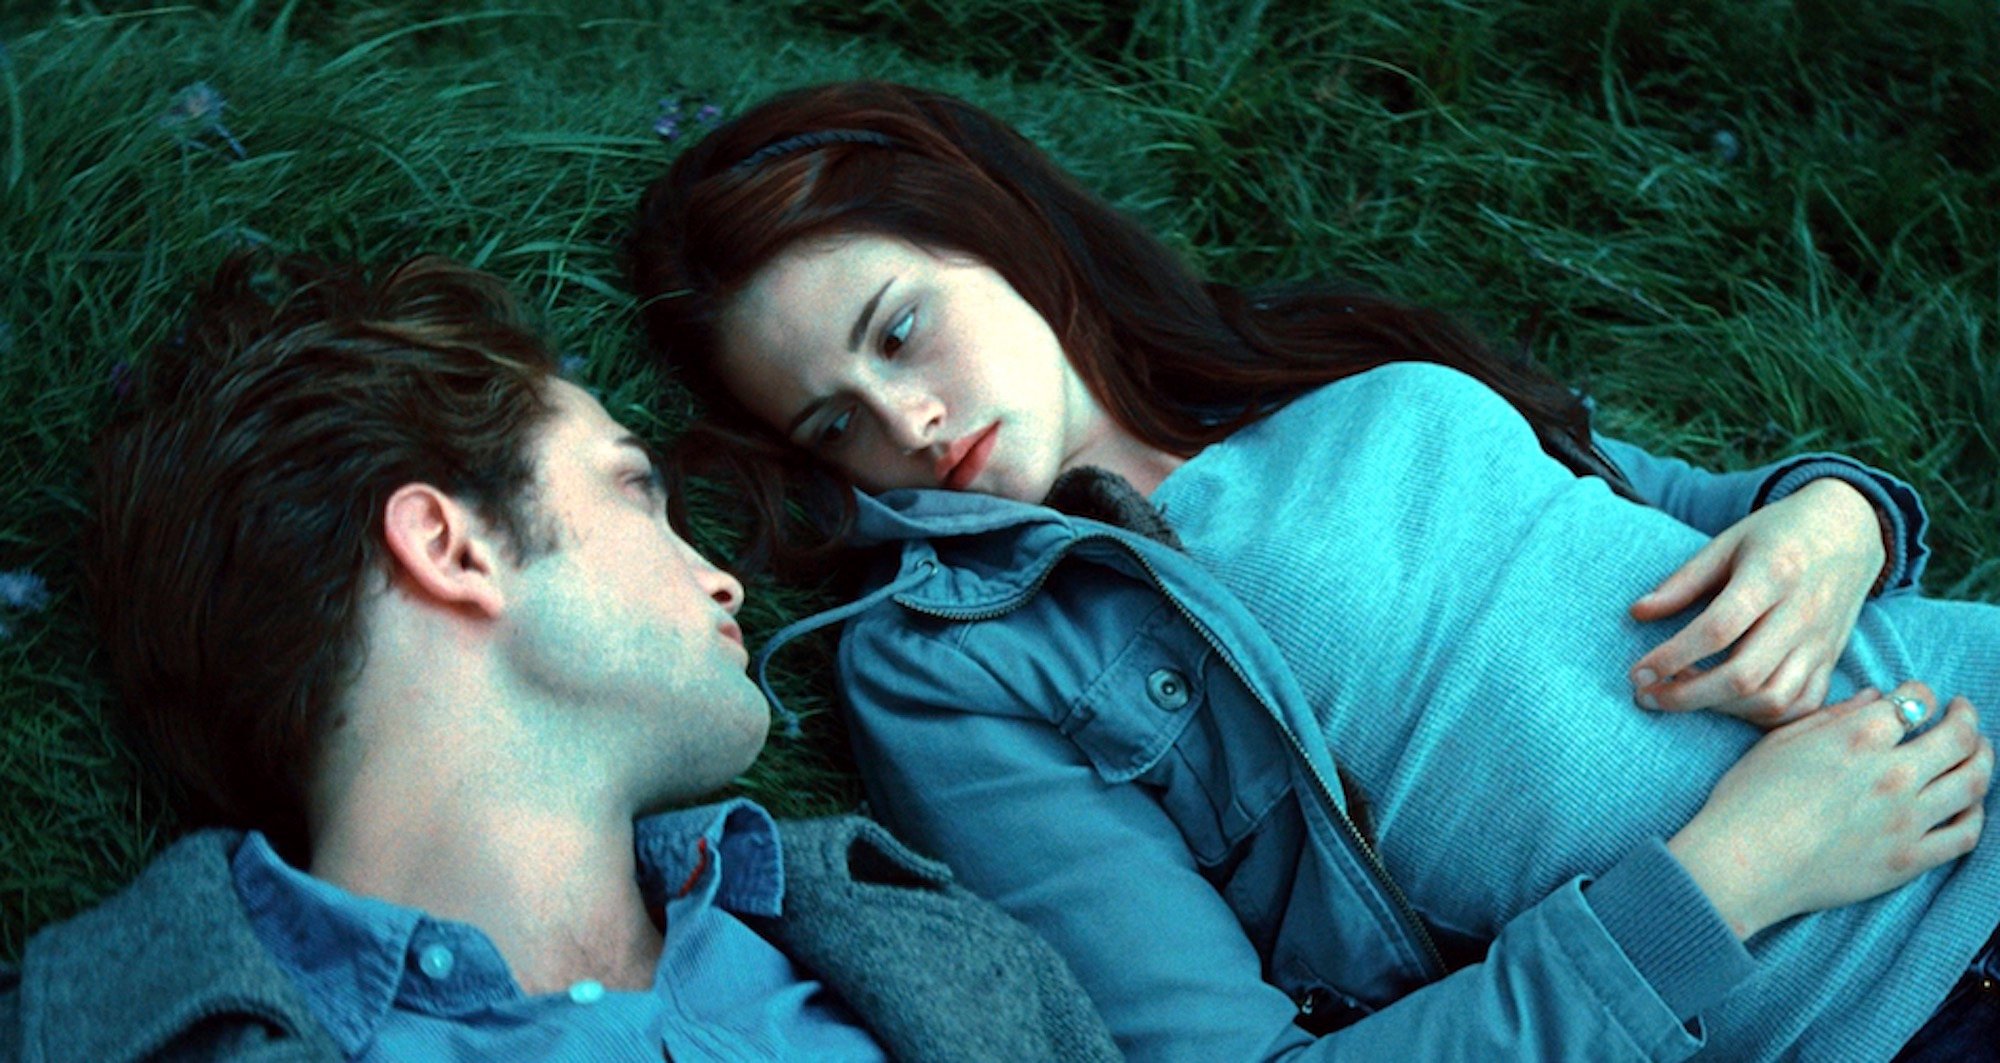 Edward Cullen (Robert Pattinson) and Bella Swan (Kristen Stewart) in his meadow, 'Twilight'